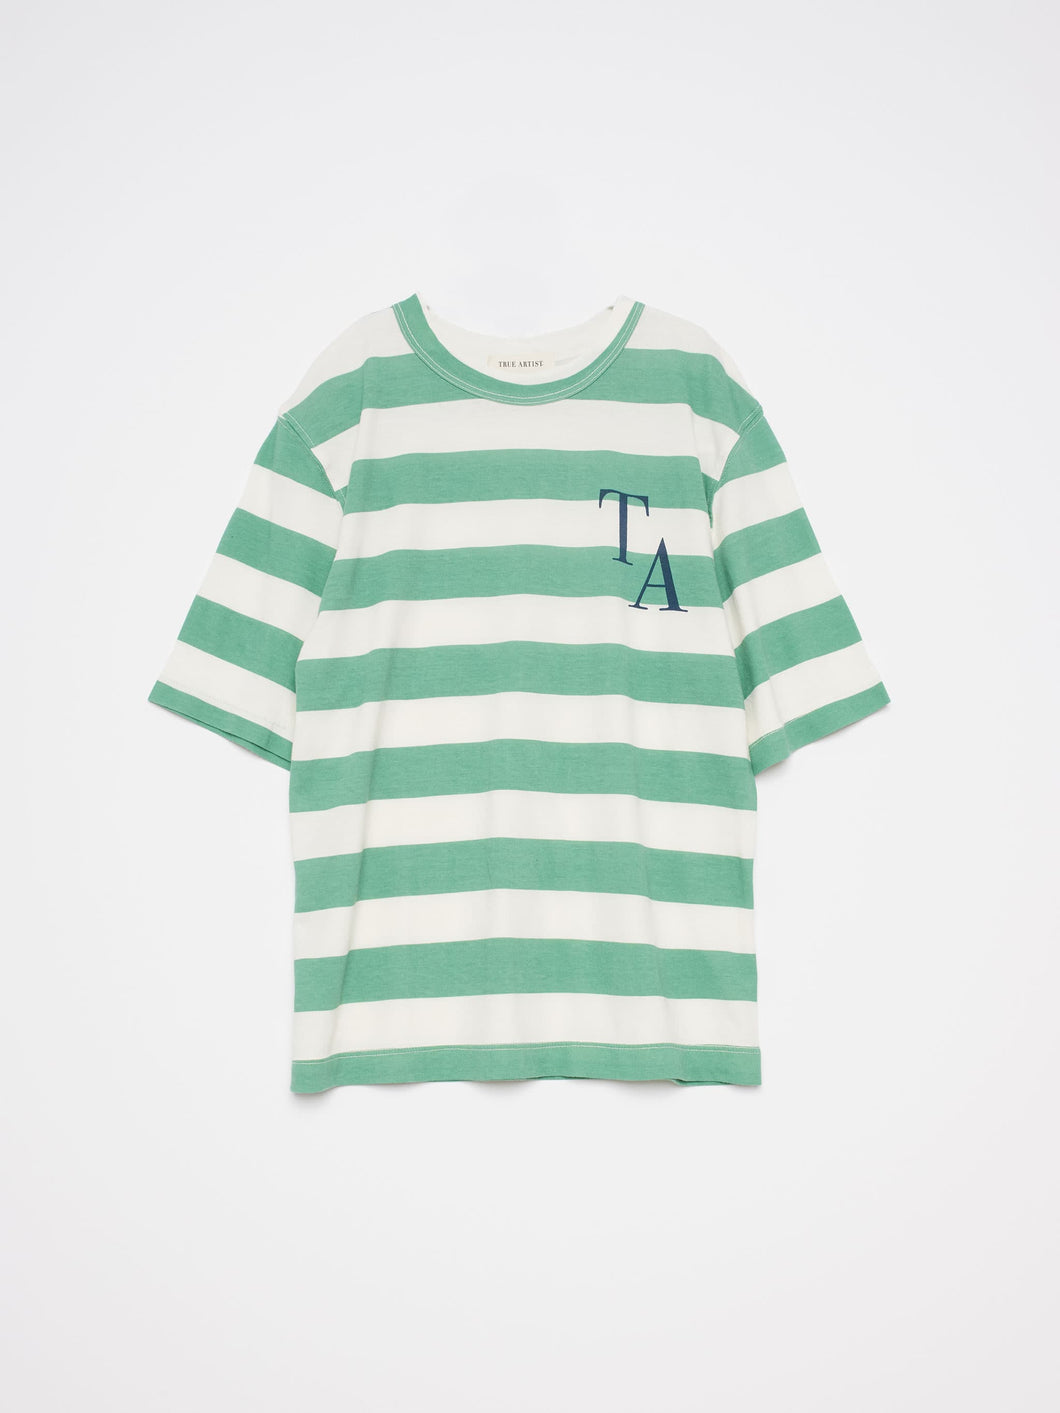 True Artist / KID / T-shirt nº05 / Soft Green